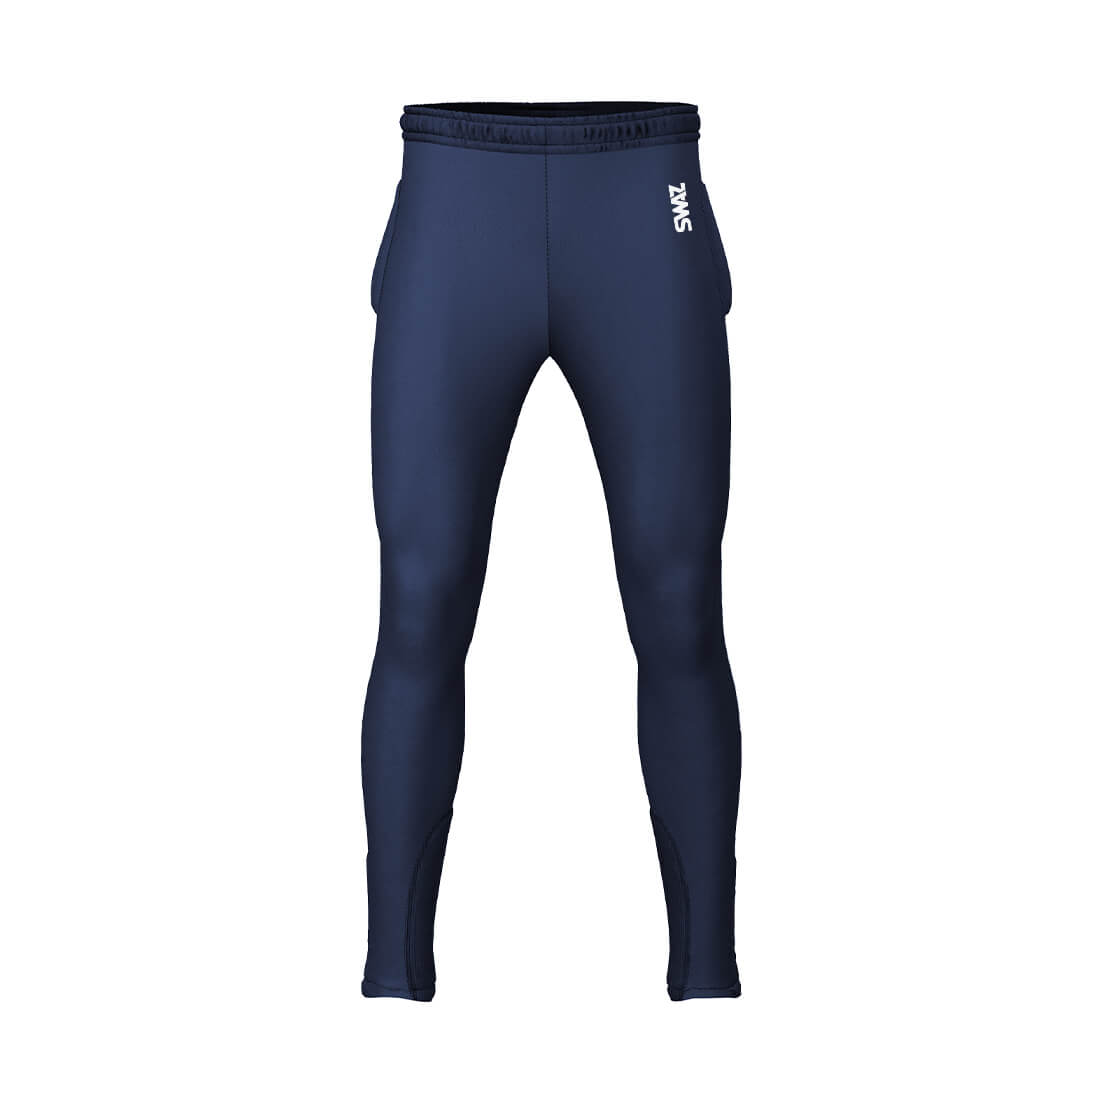 Plymouth Parkway Skinny Pants | Football Training Kit and Teamwear